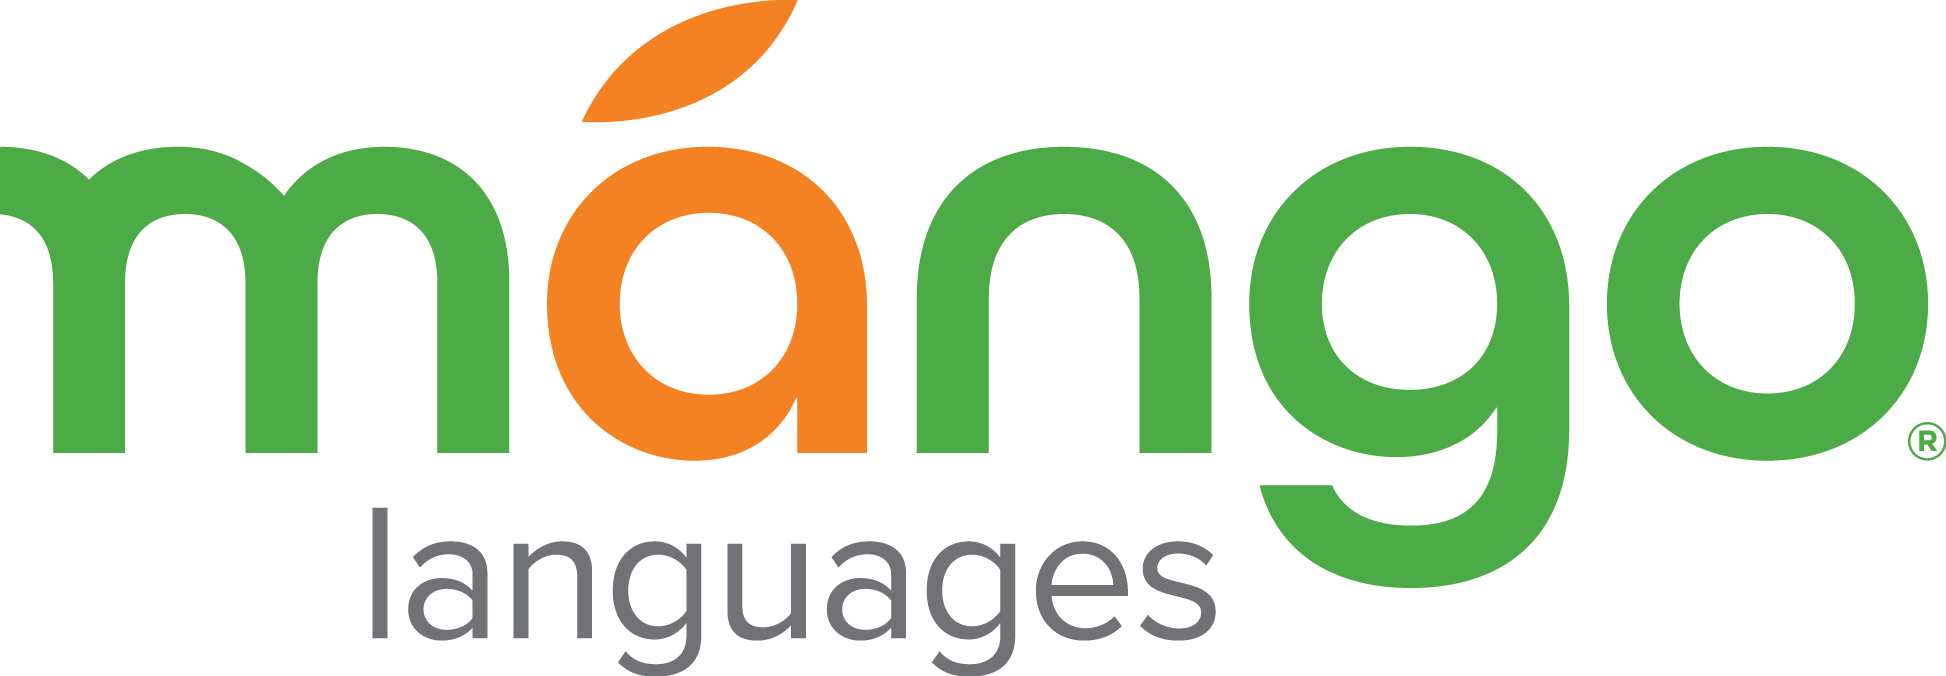 mango languages logo and link to website